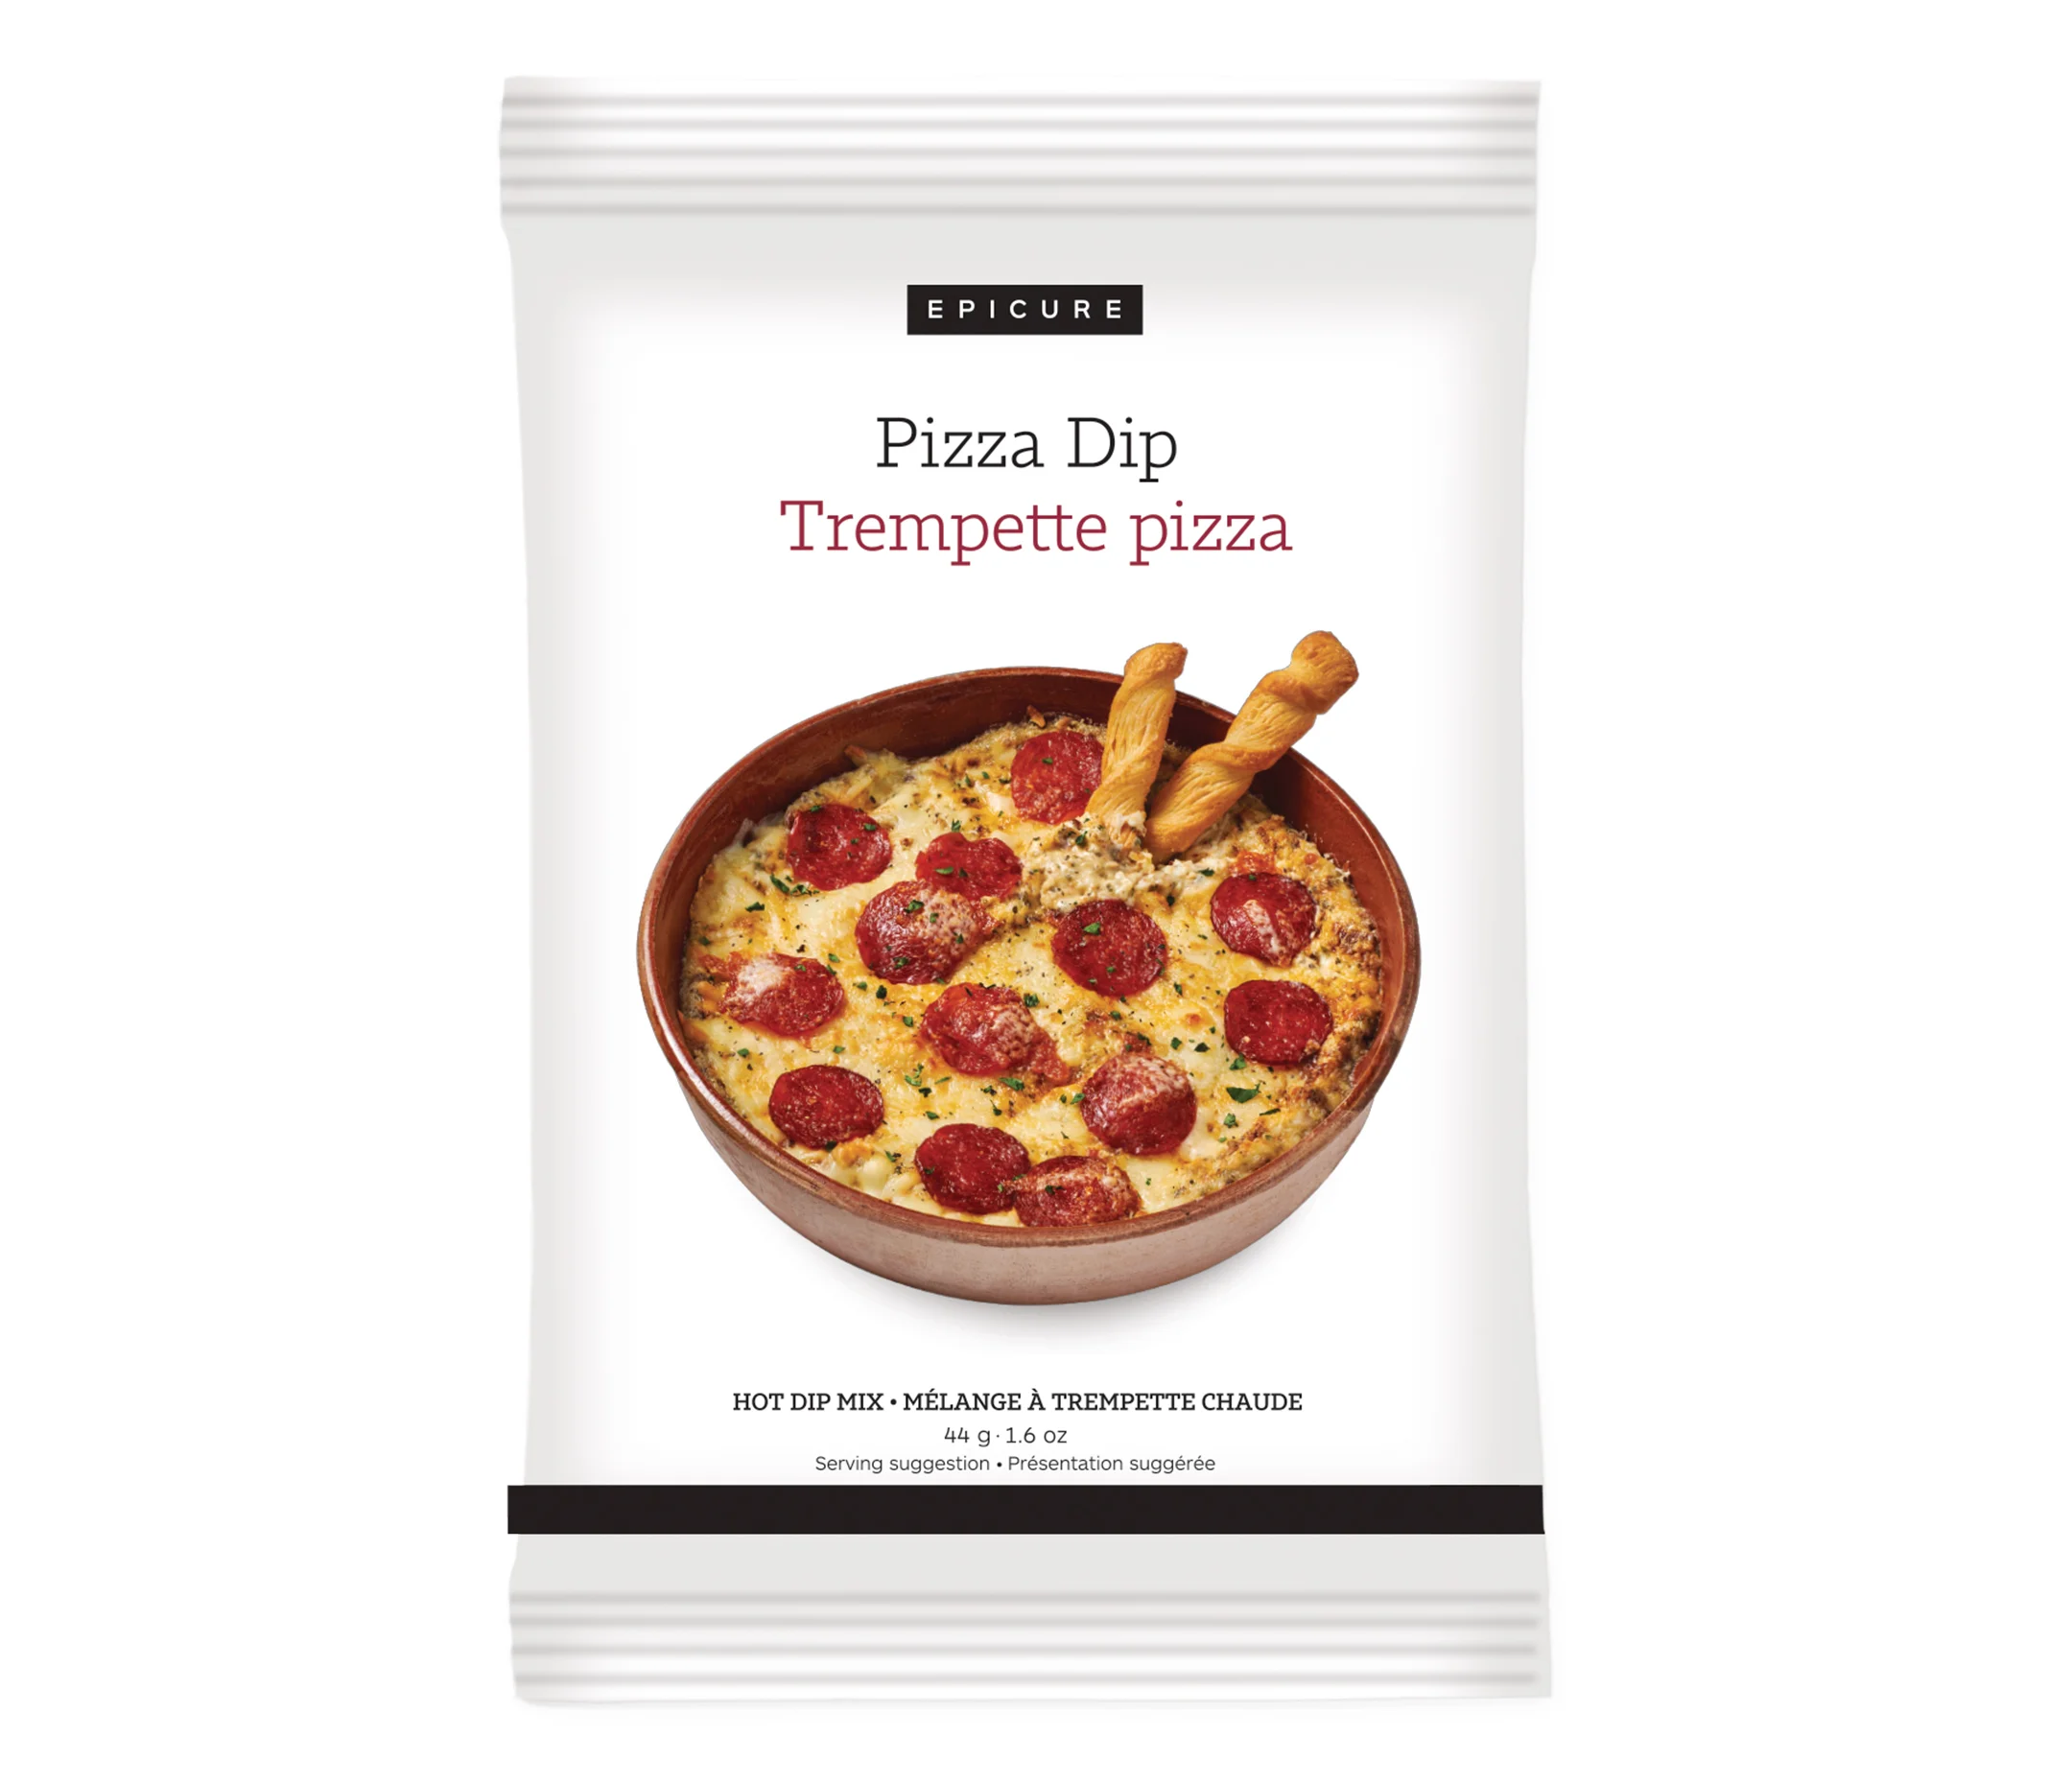 Pizza Dip Hot Dip Mix (Pack of 2)